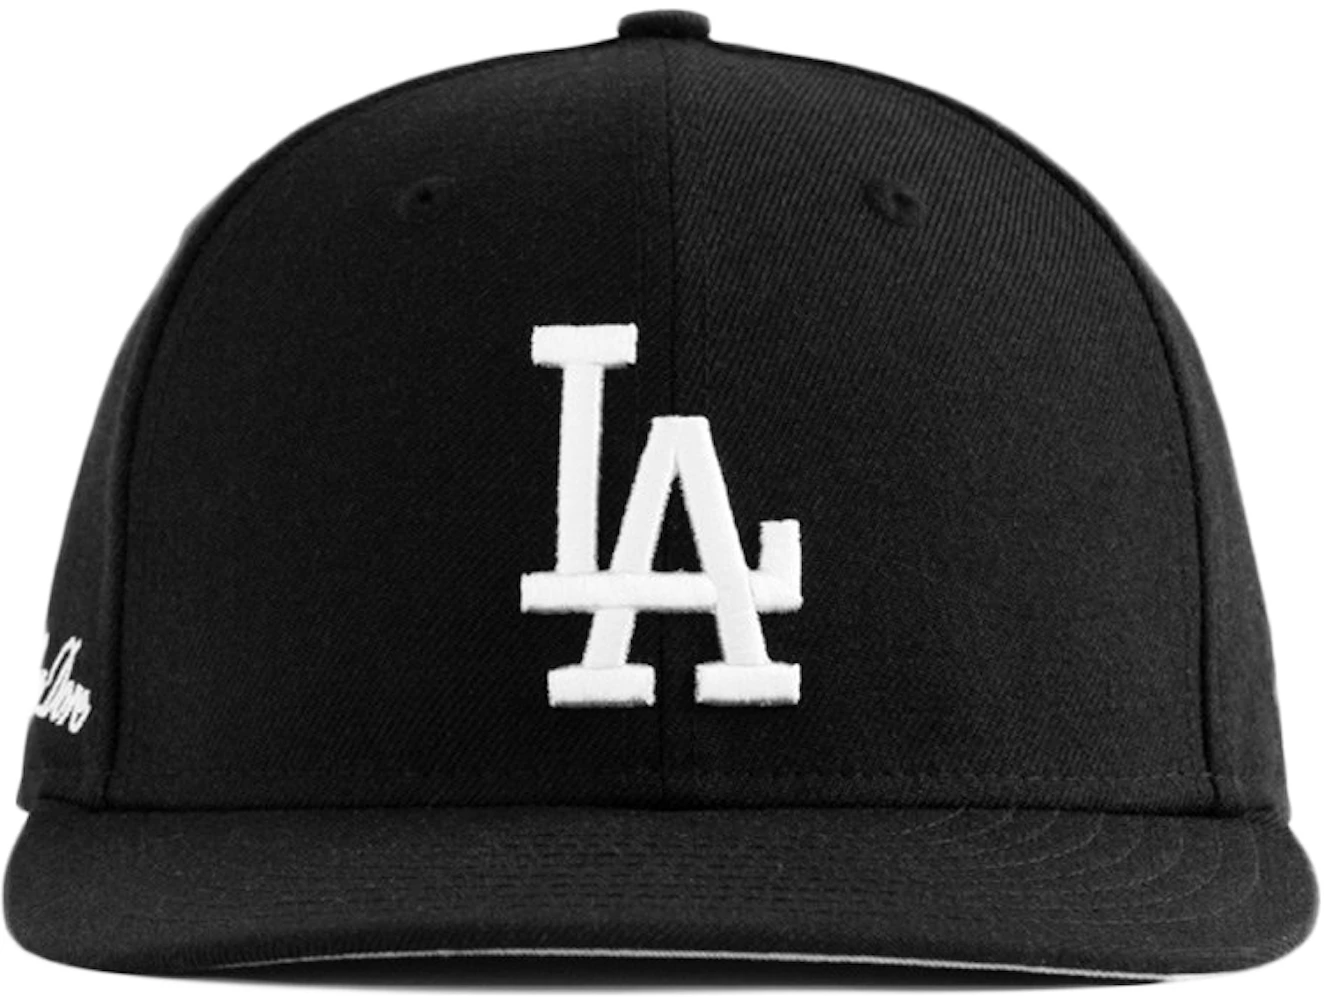 Aime Leon Dore x New Era Dodgers Hat Black - FW20 - US